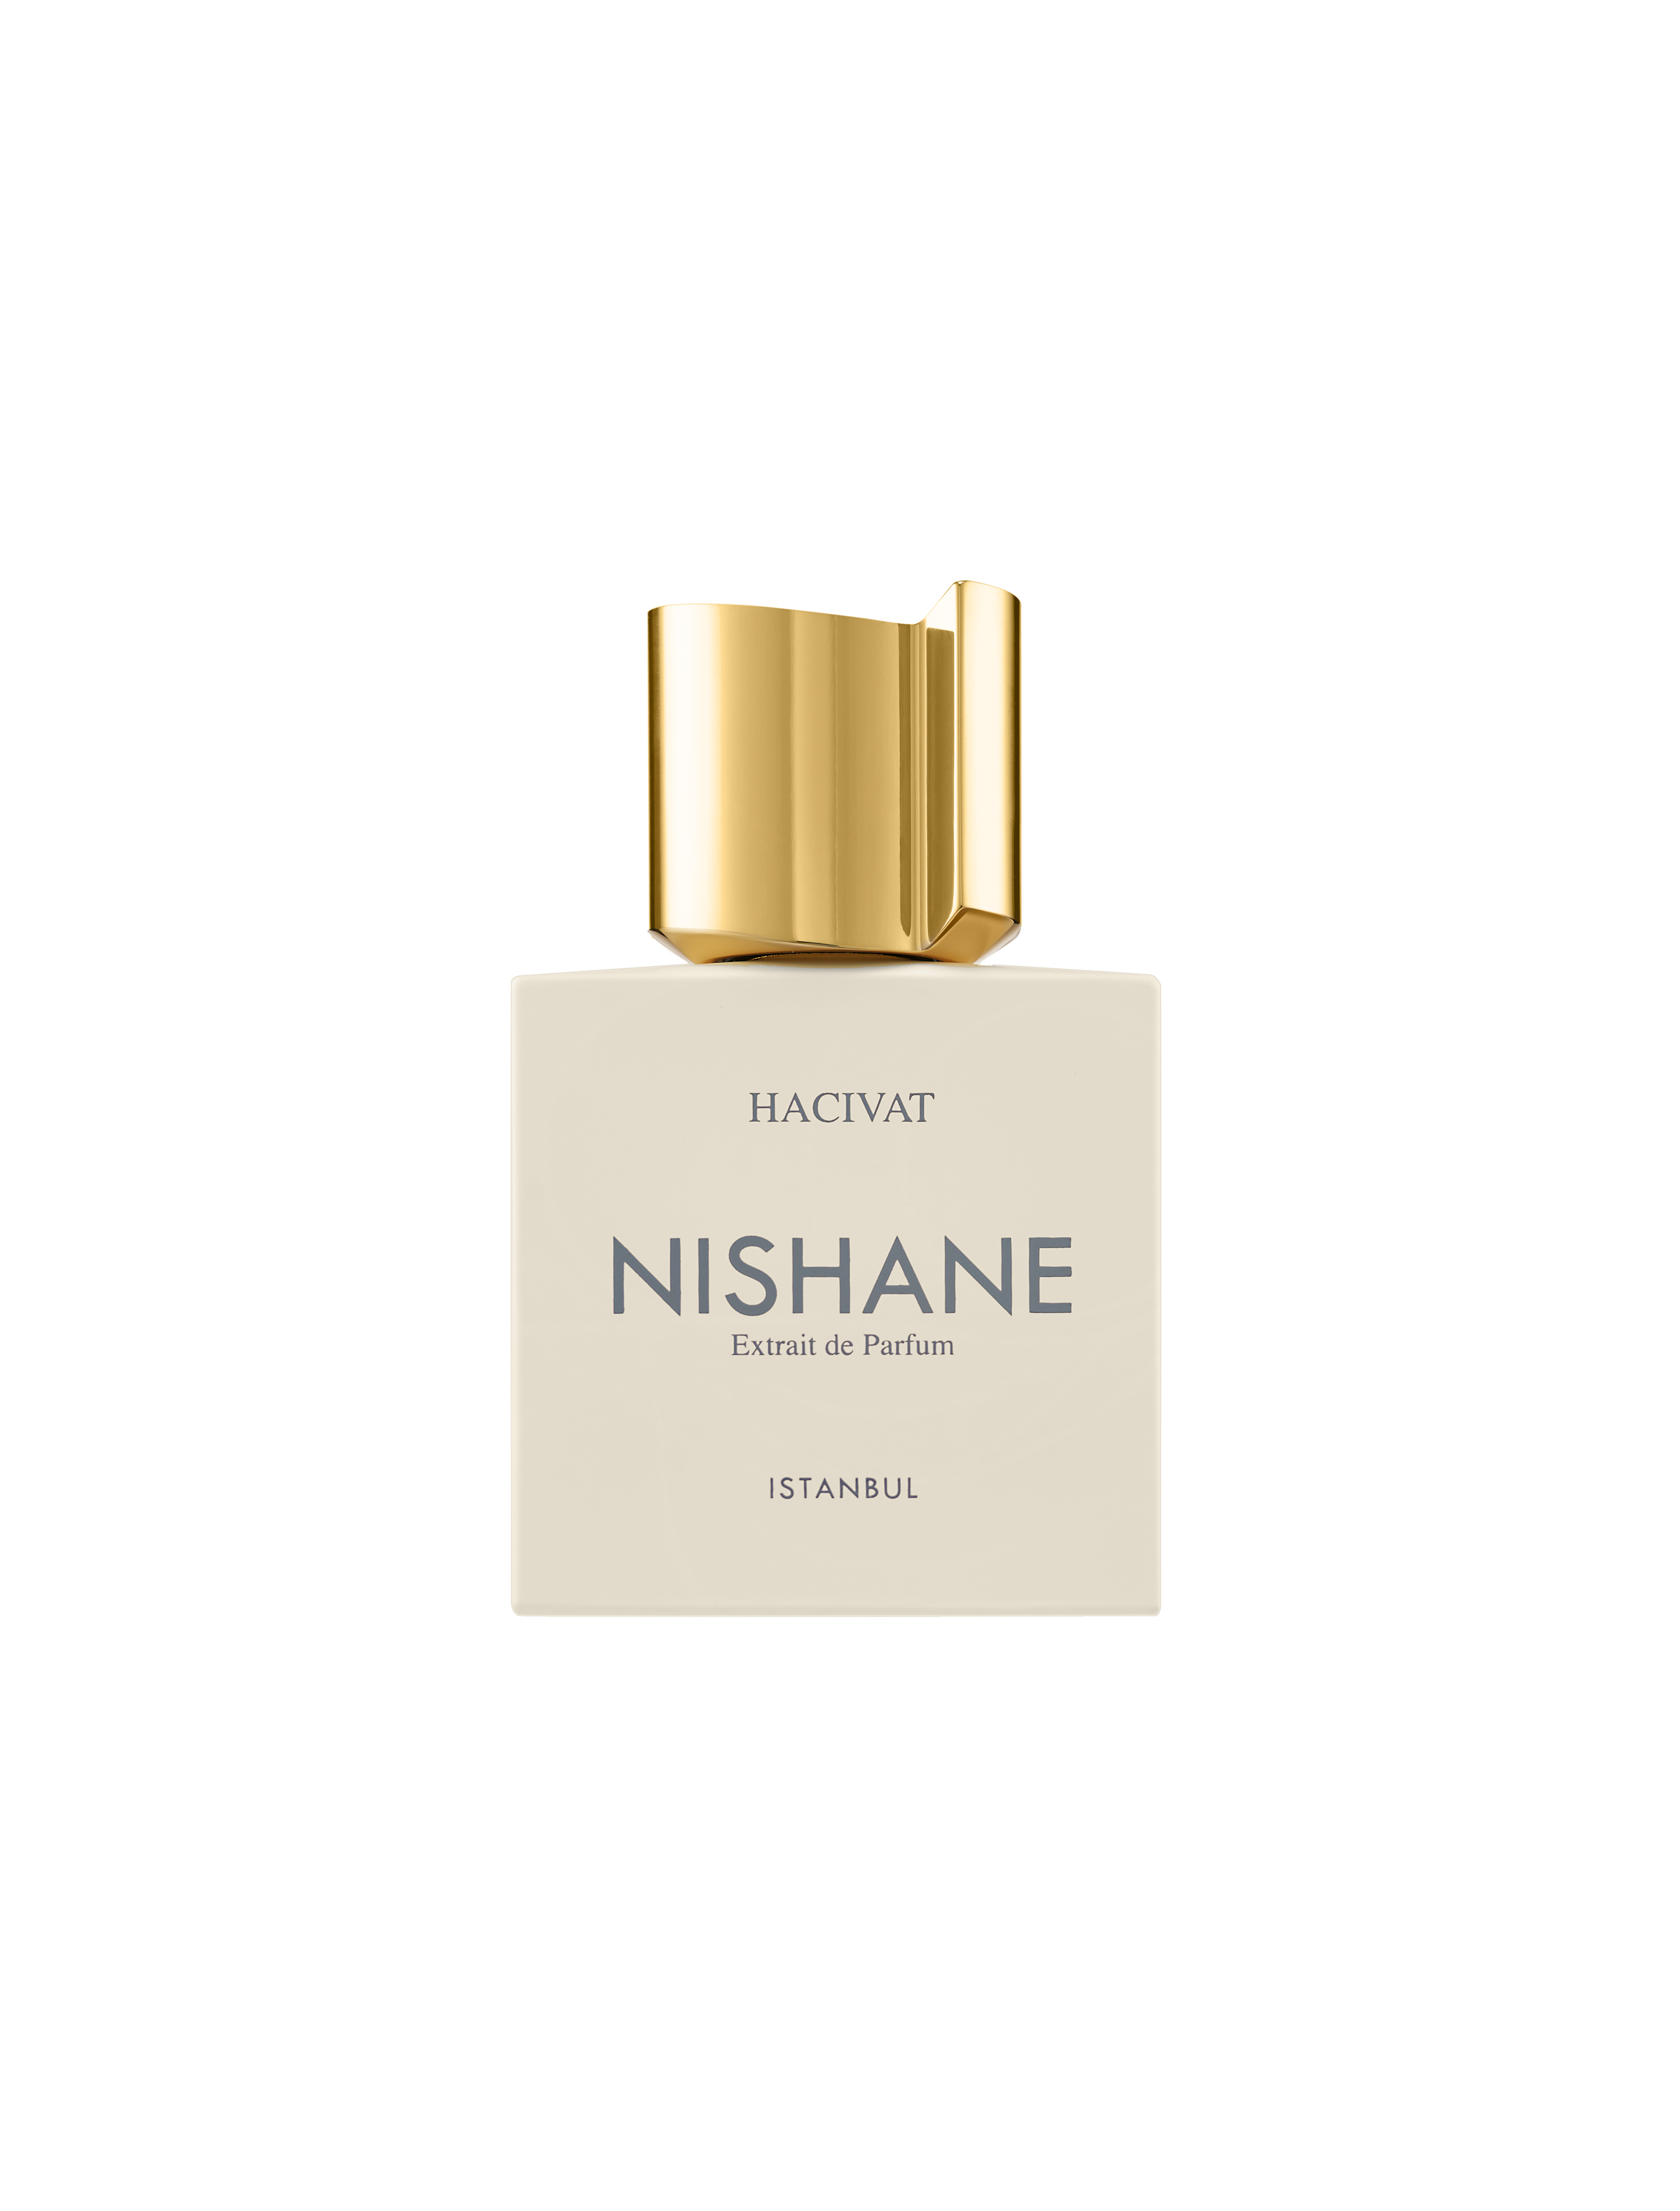 Nishane - Hacivat - Extrait de Parfum 50 ml